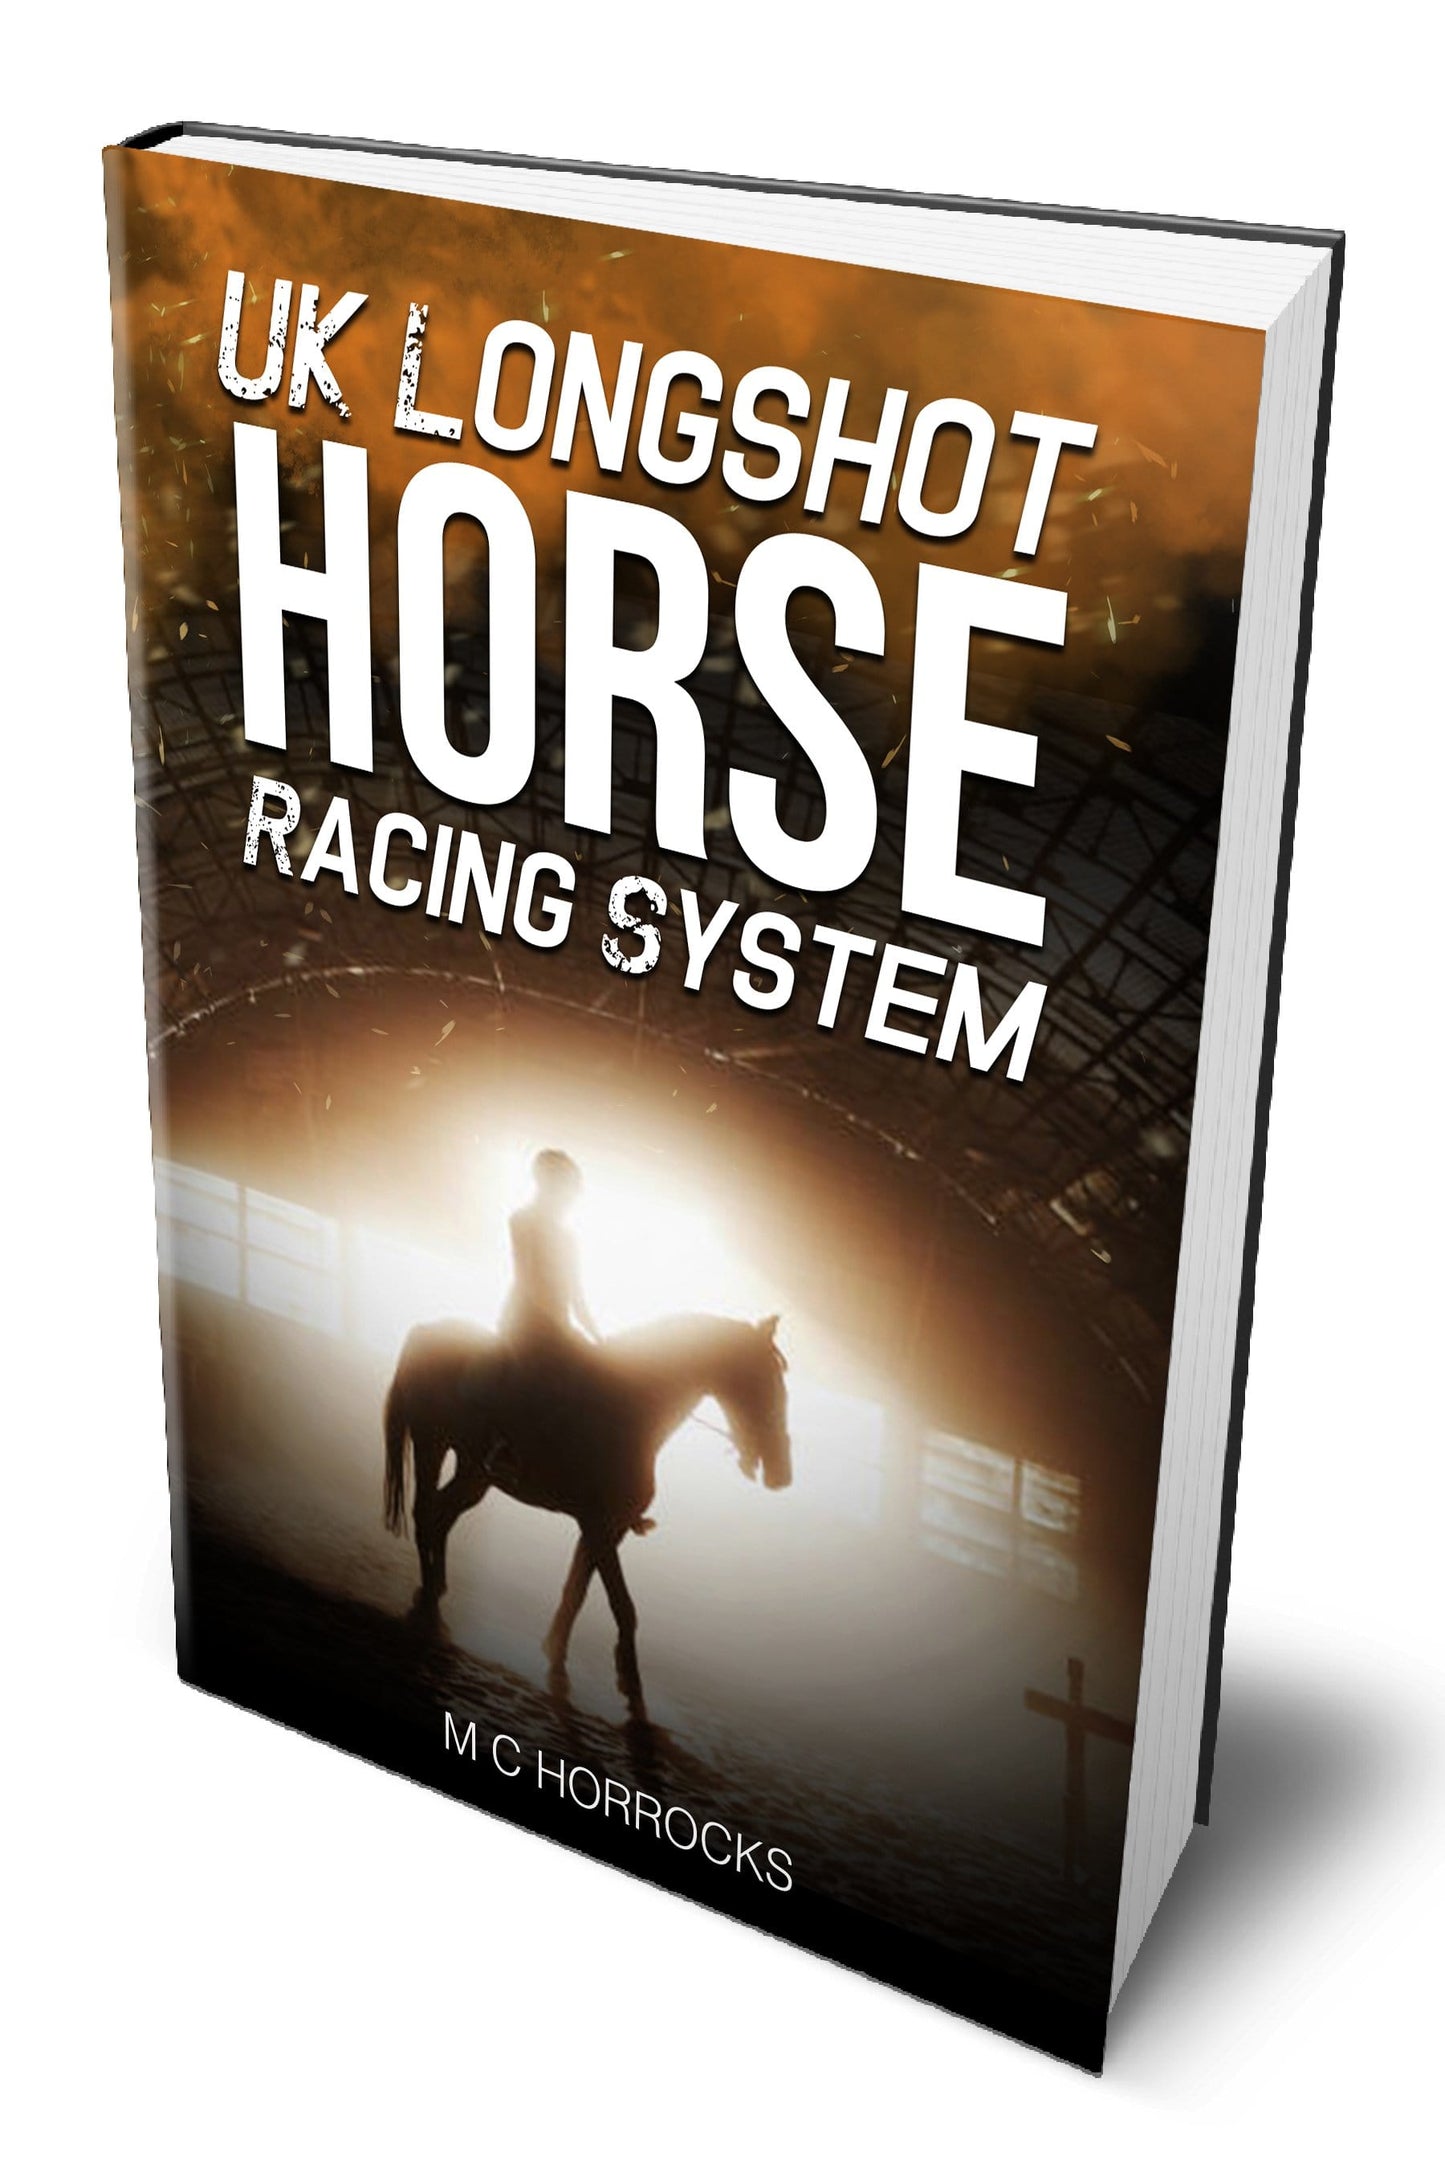 UK Longshot Horse Racing System 33/1 20/1 Winners